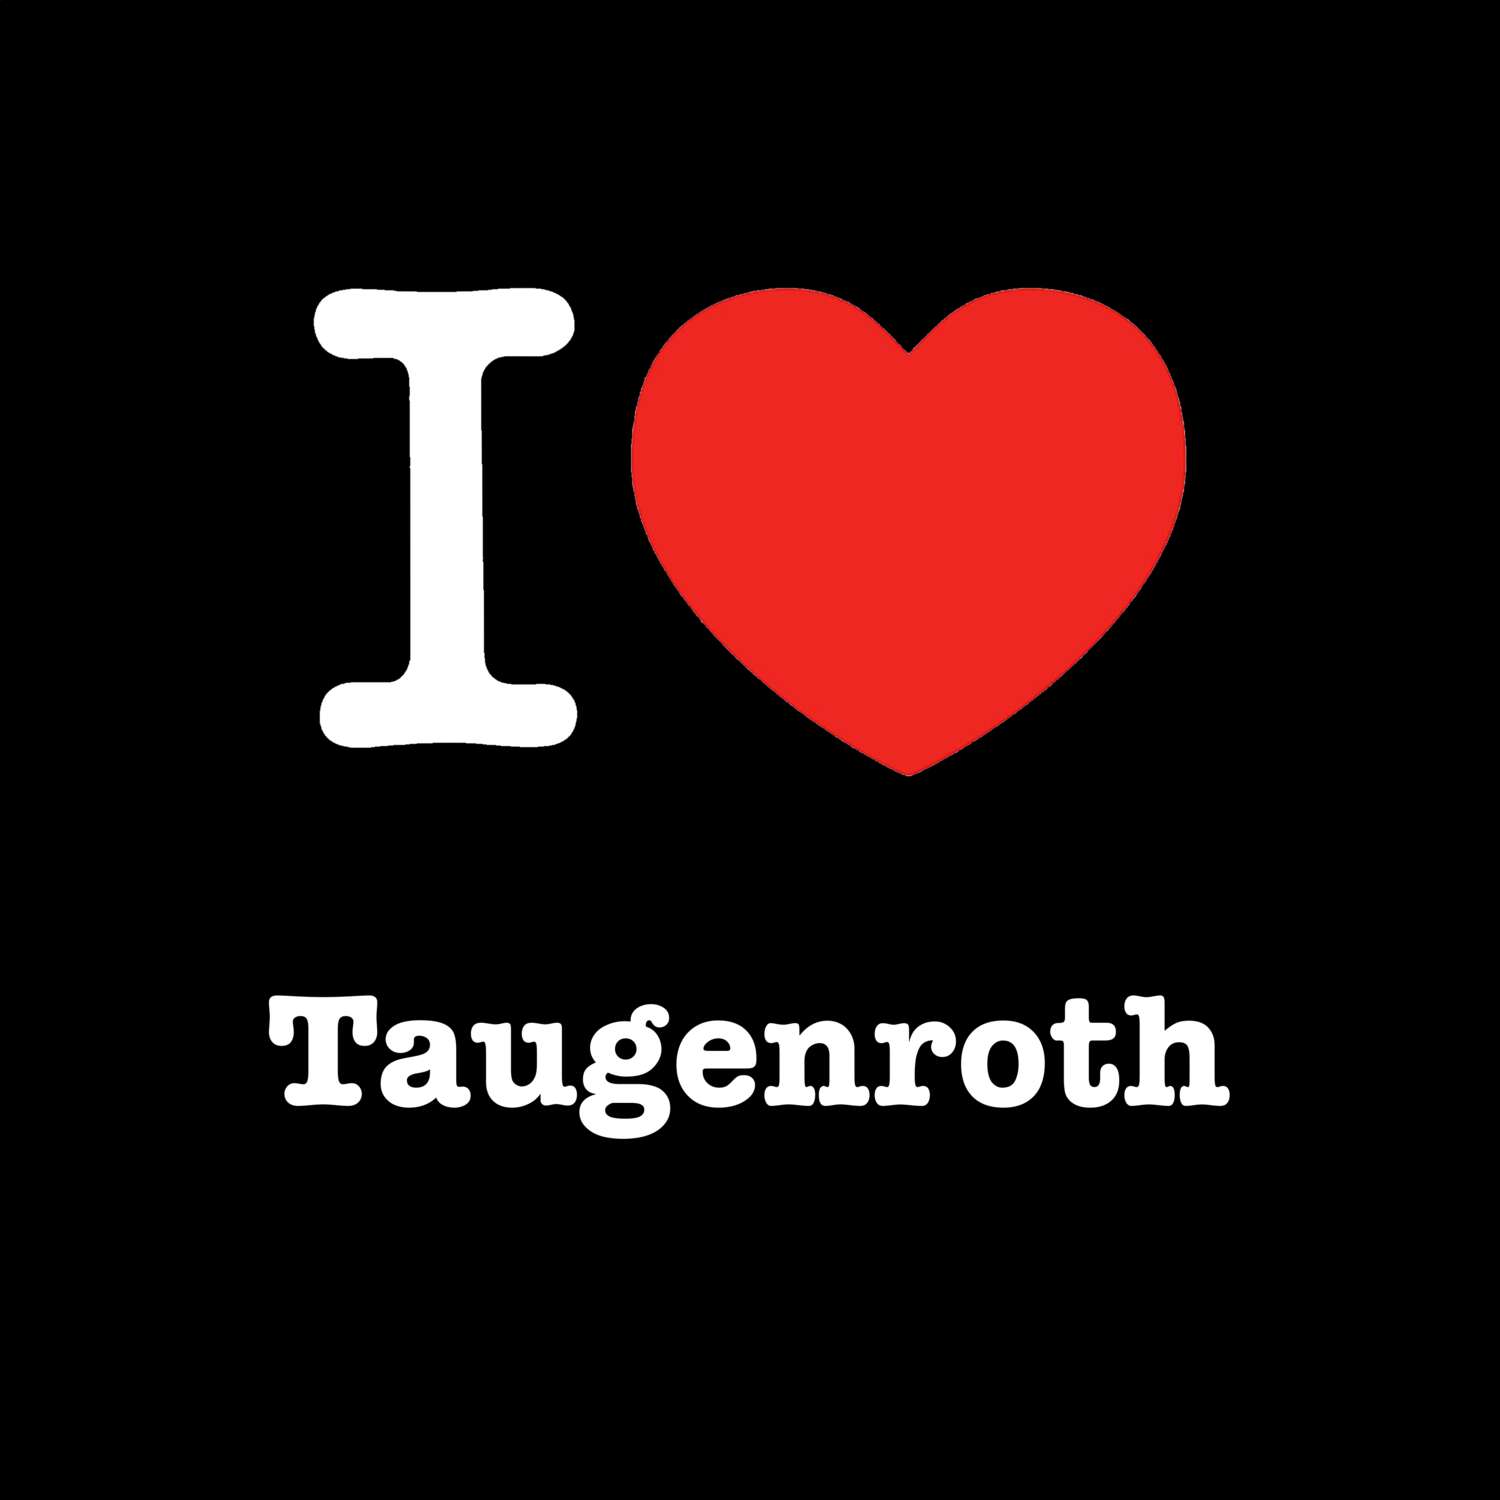 Taugenroth T-Shirt »I love«